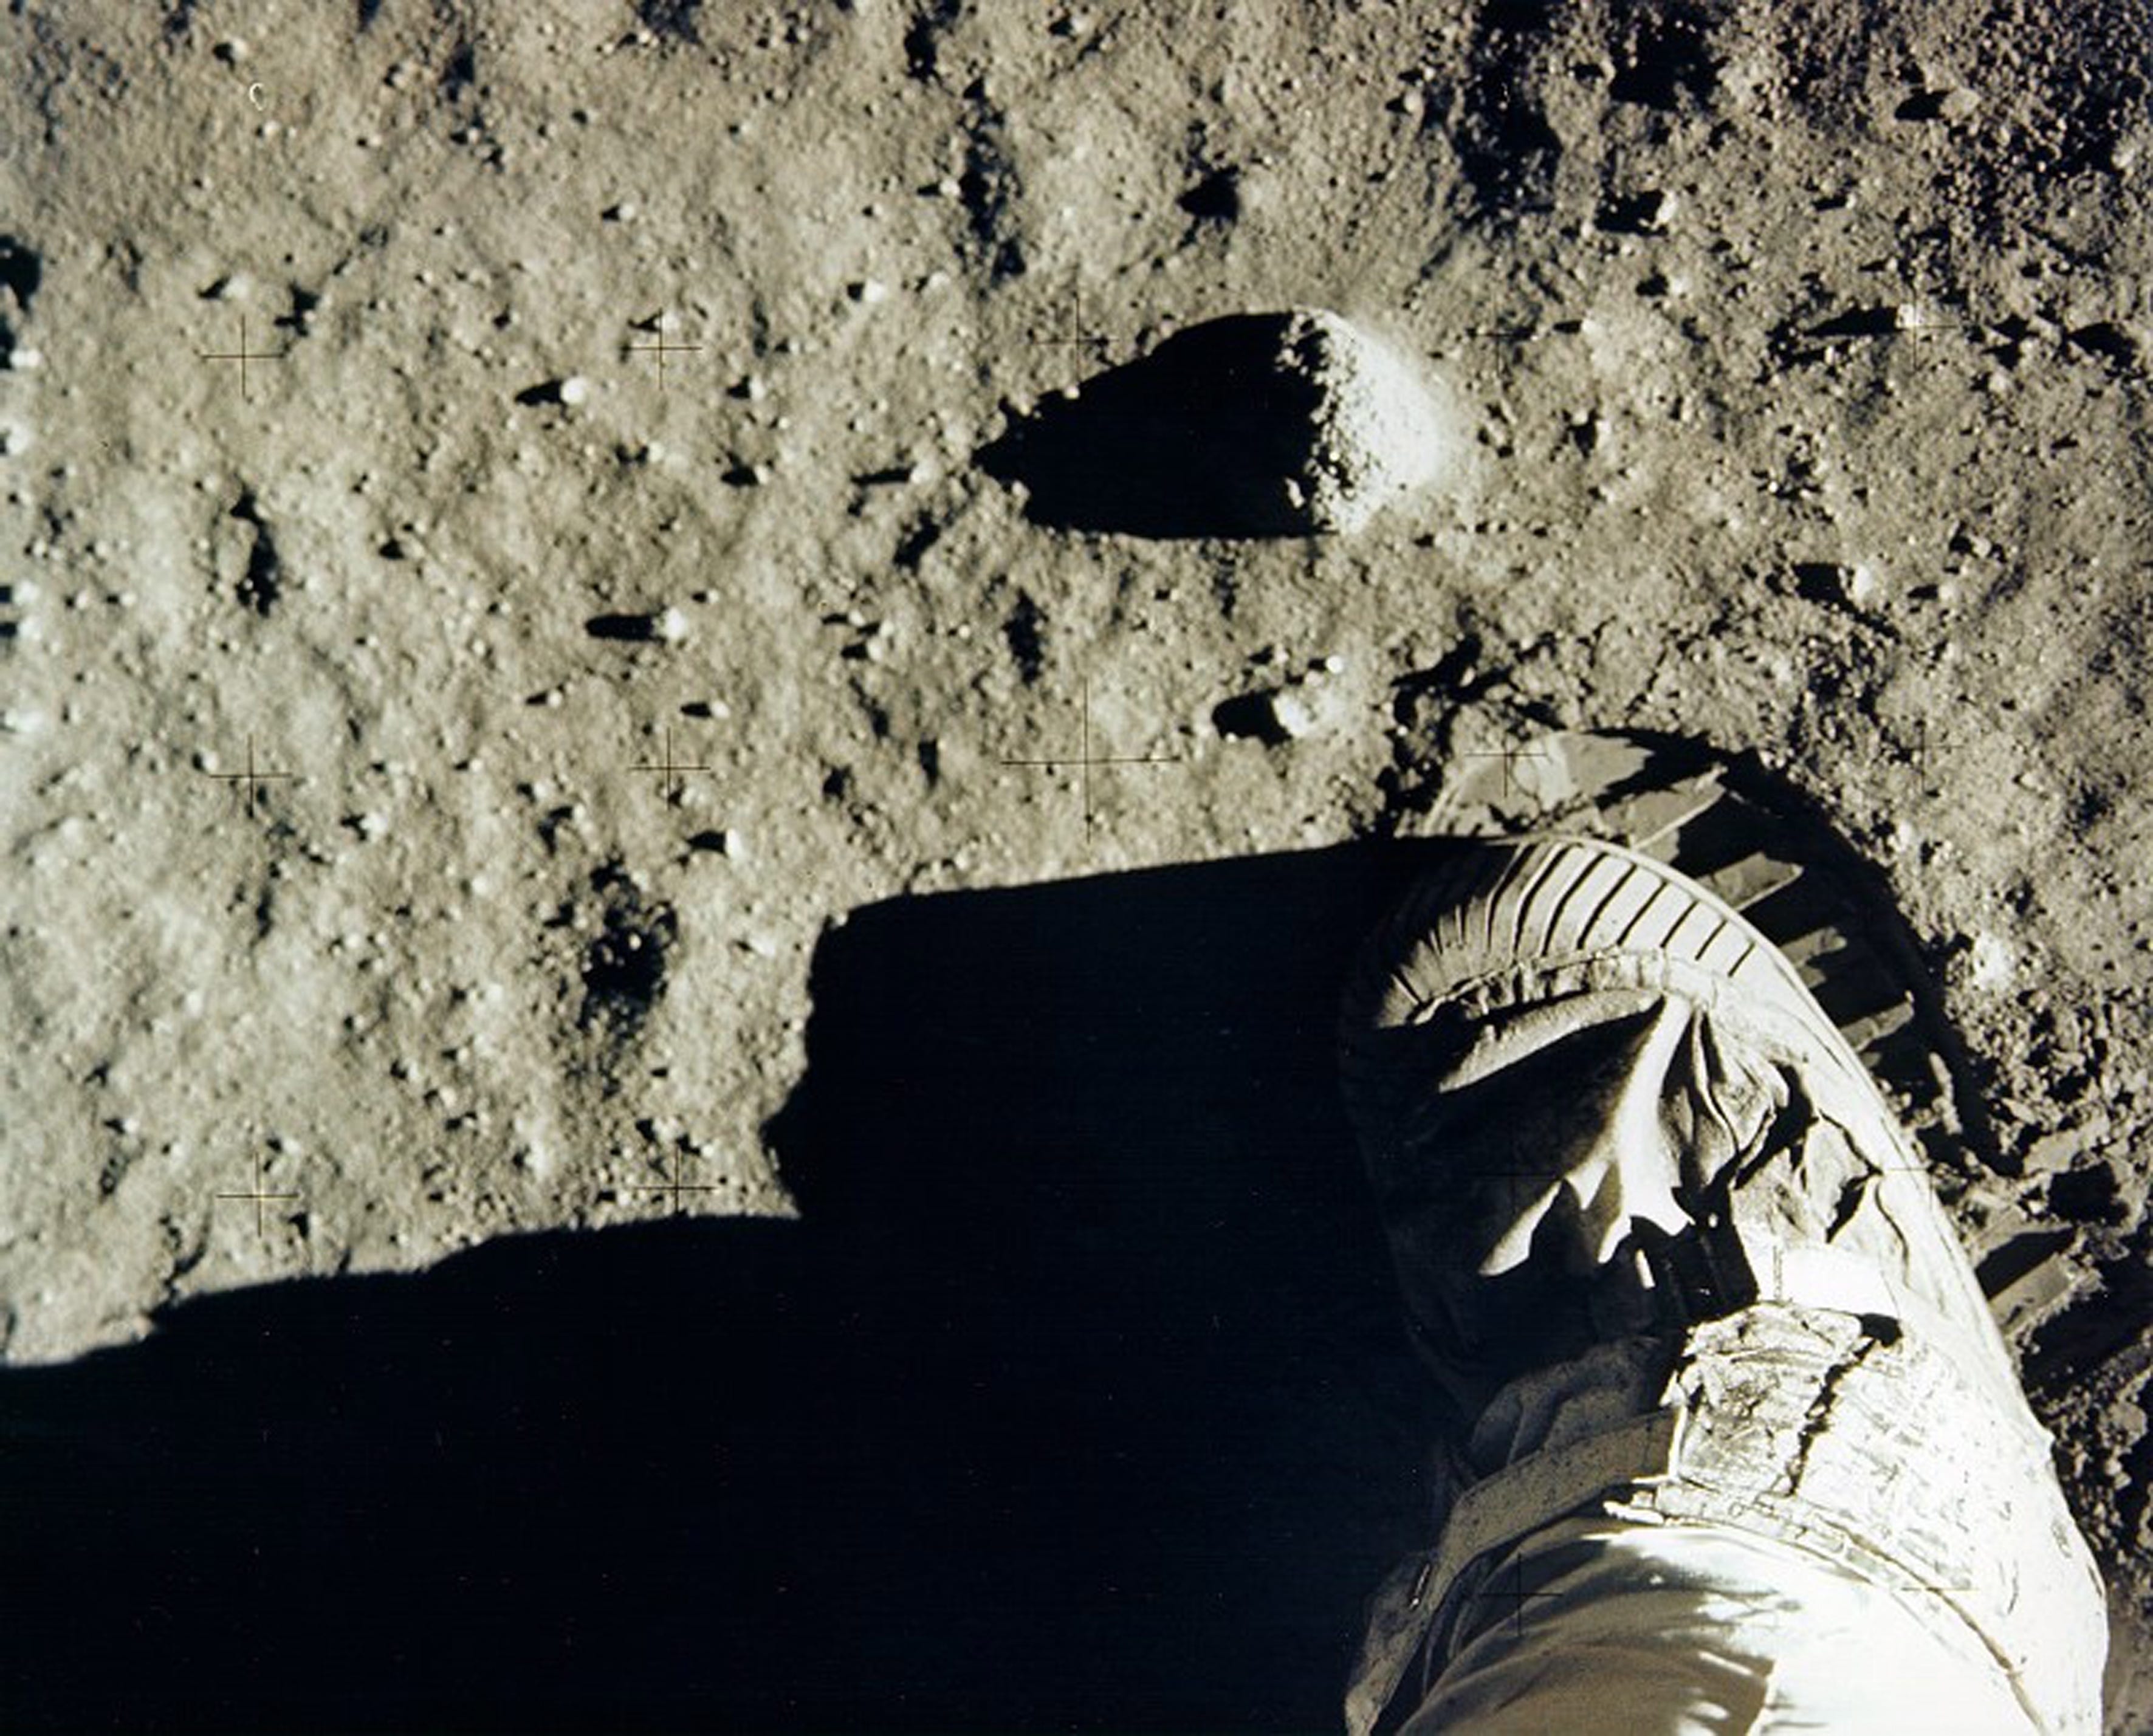 moon landing boots